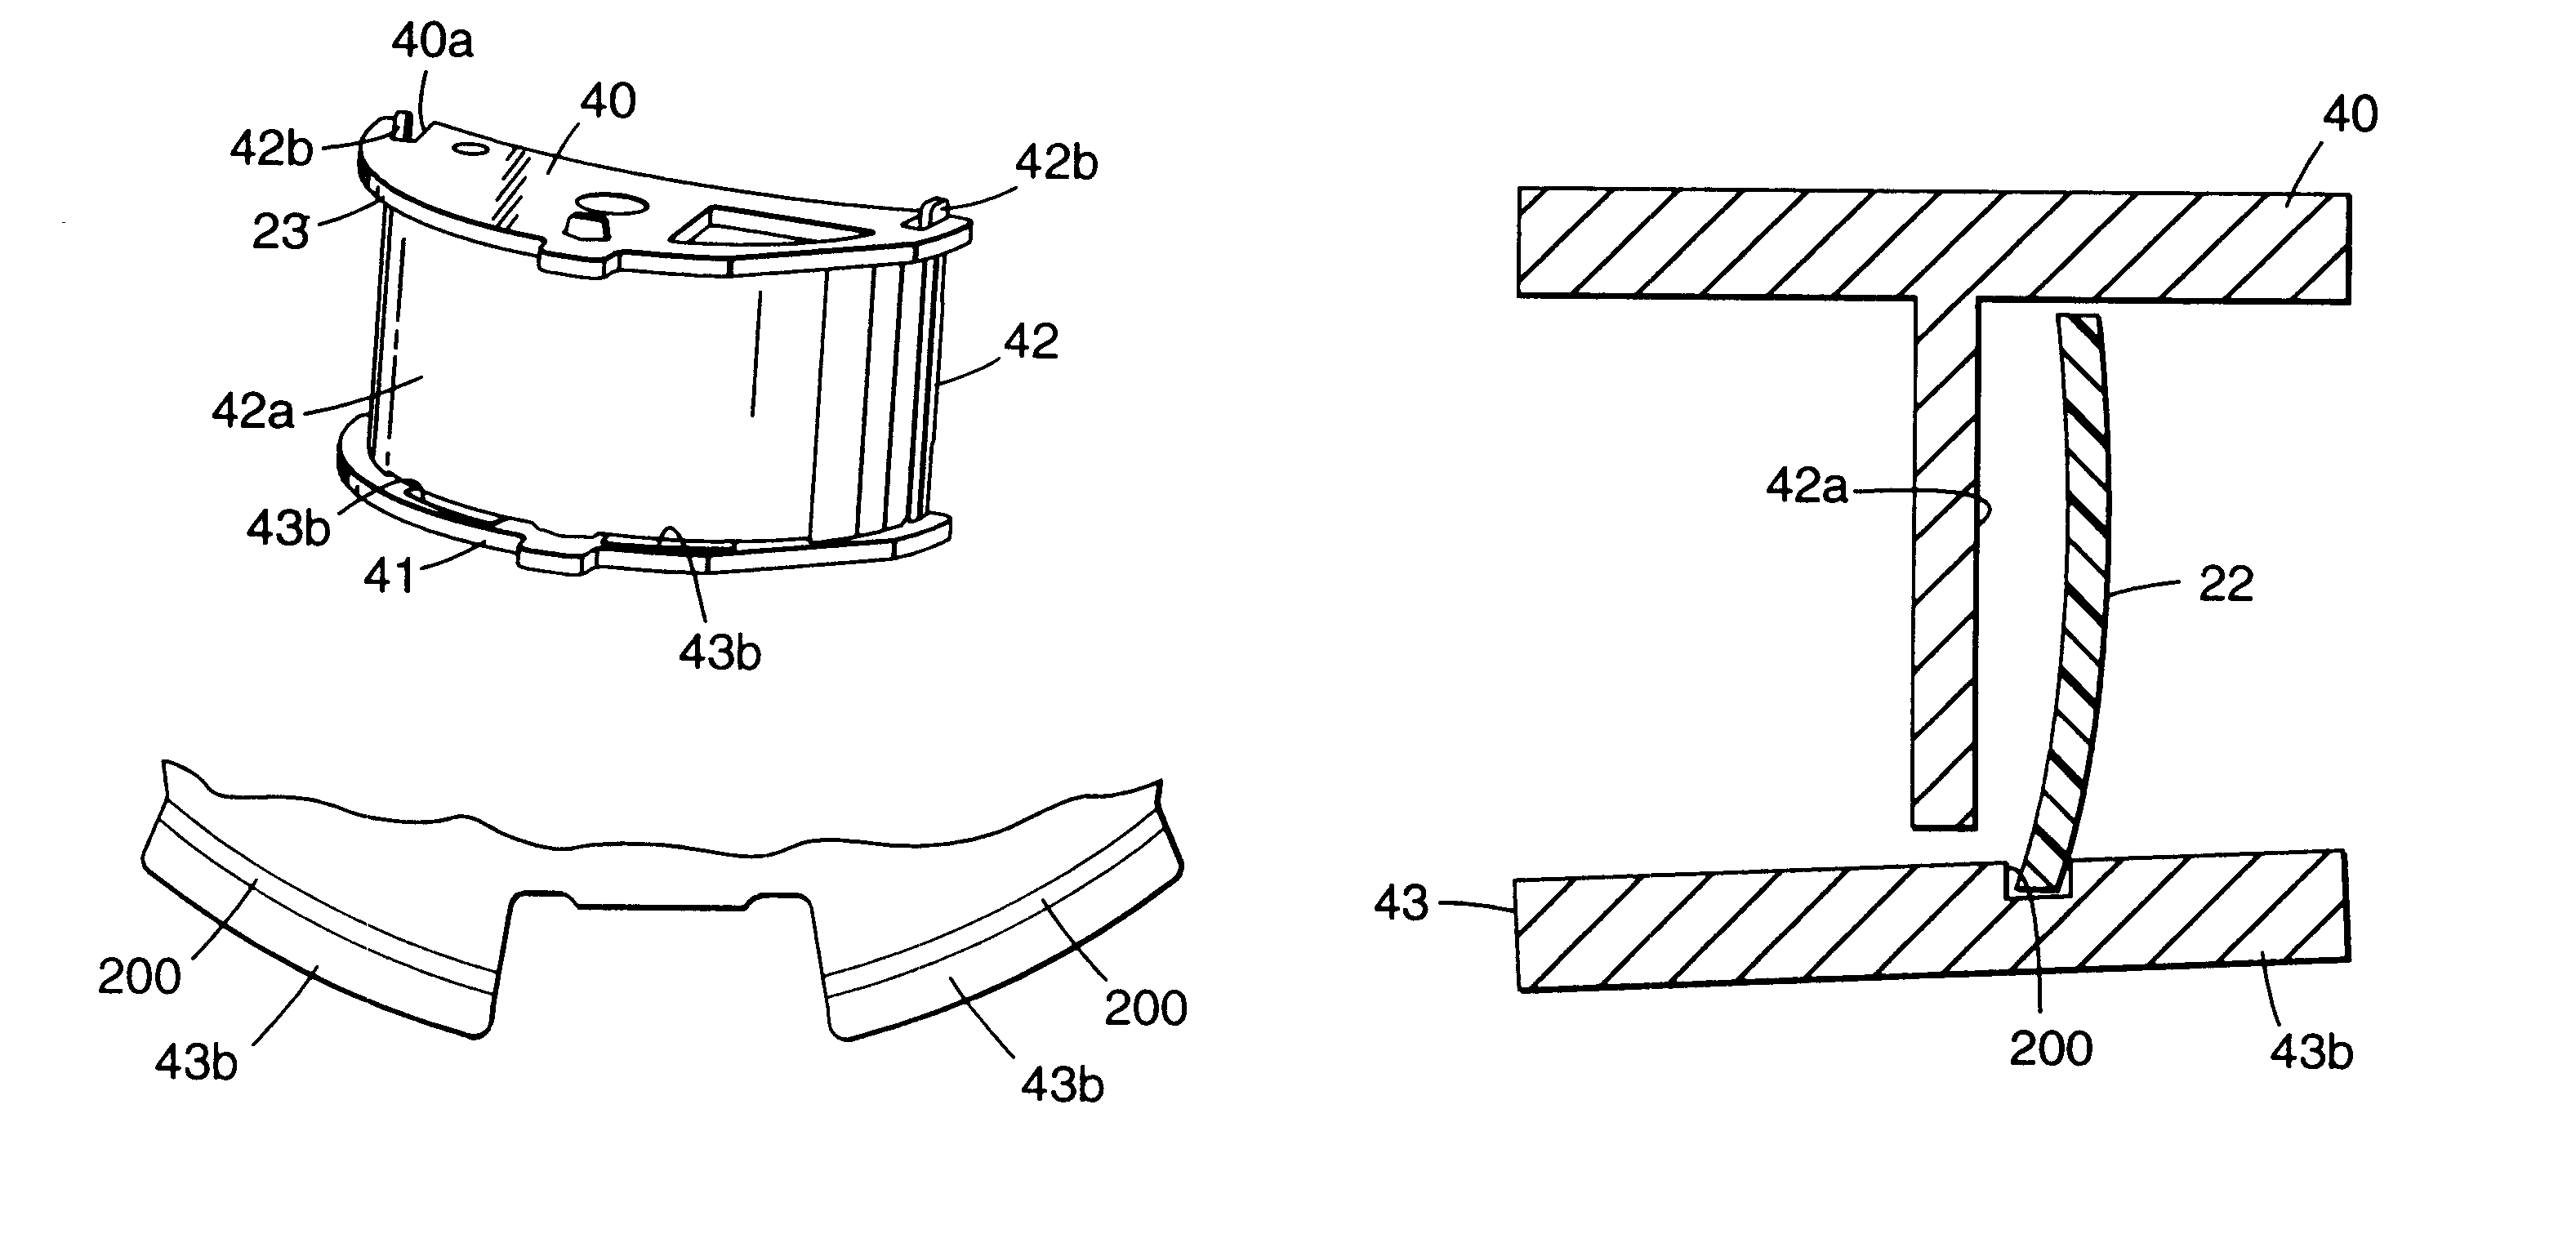 Data storage tape cartridge with guide having wear pattern